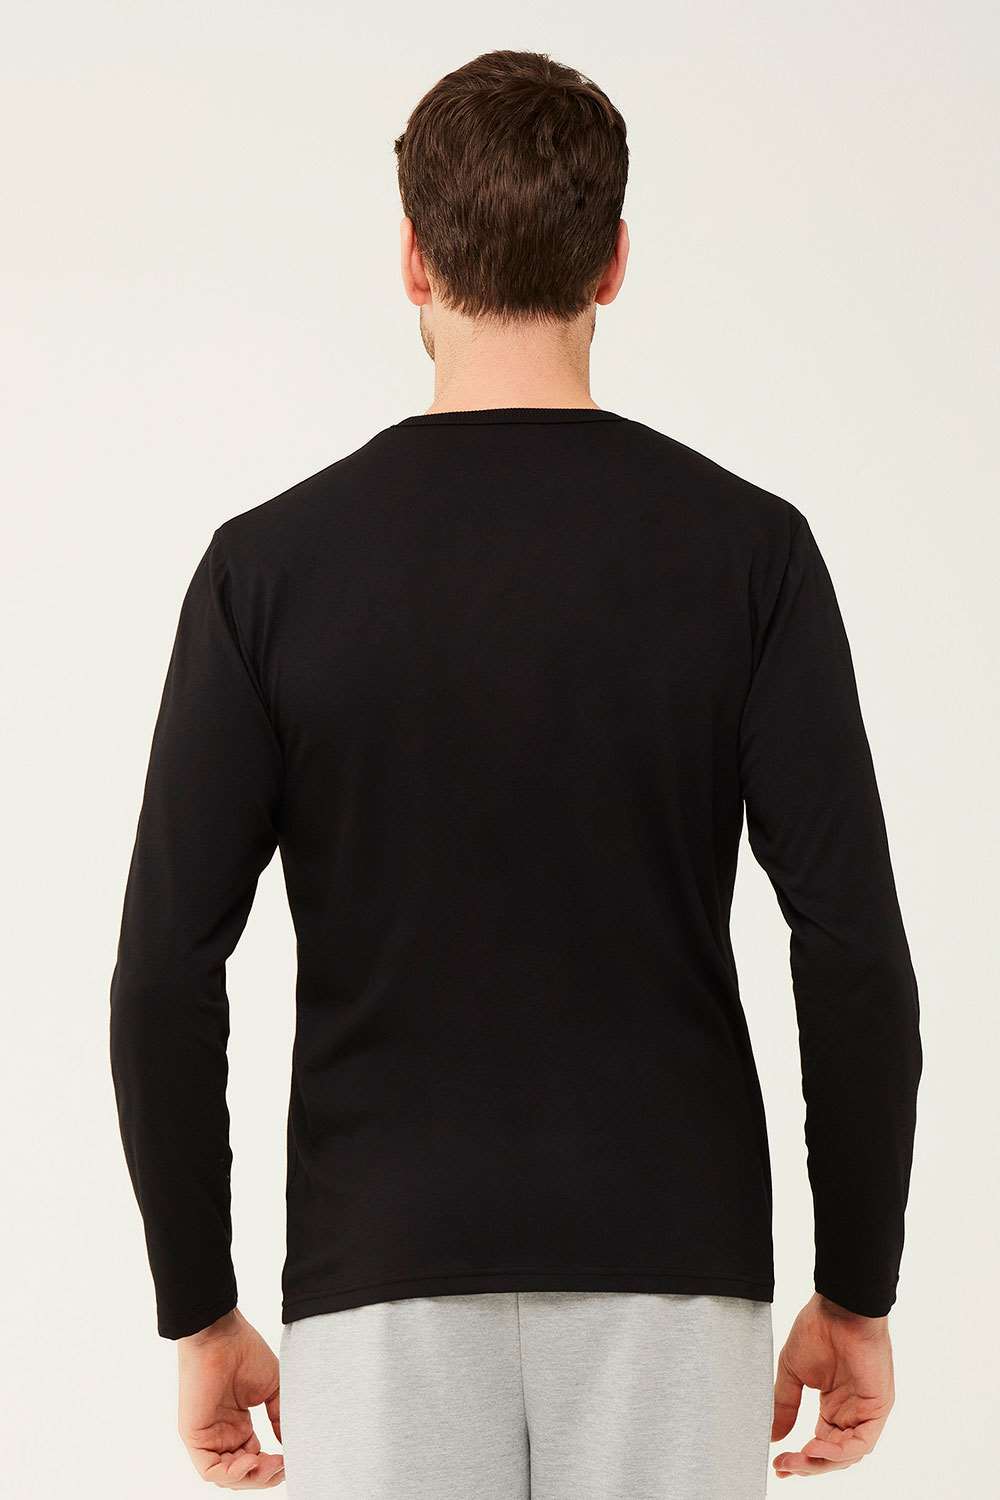 U.S. Polo Assn. Erkek Siyah Uzun Kollu T-shirt | Modcollection.com.tr